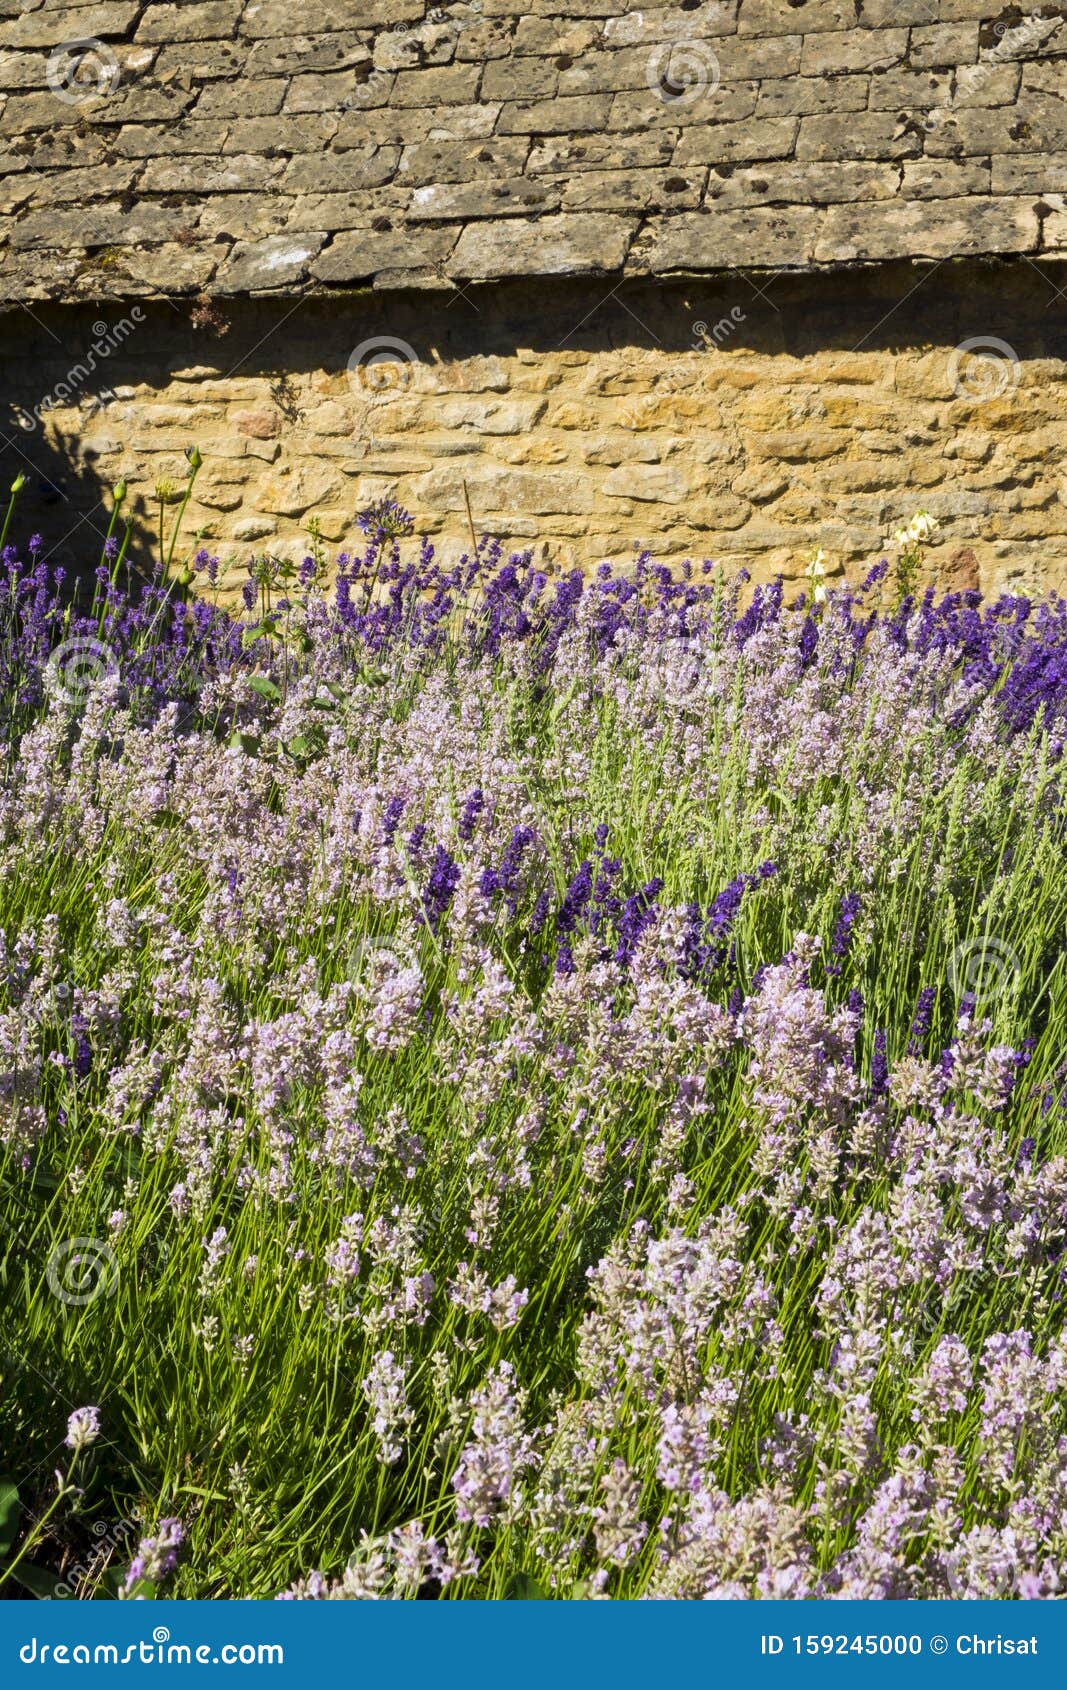 Summer Lavender Garden Border Stock Photo Image of cottage, europe